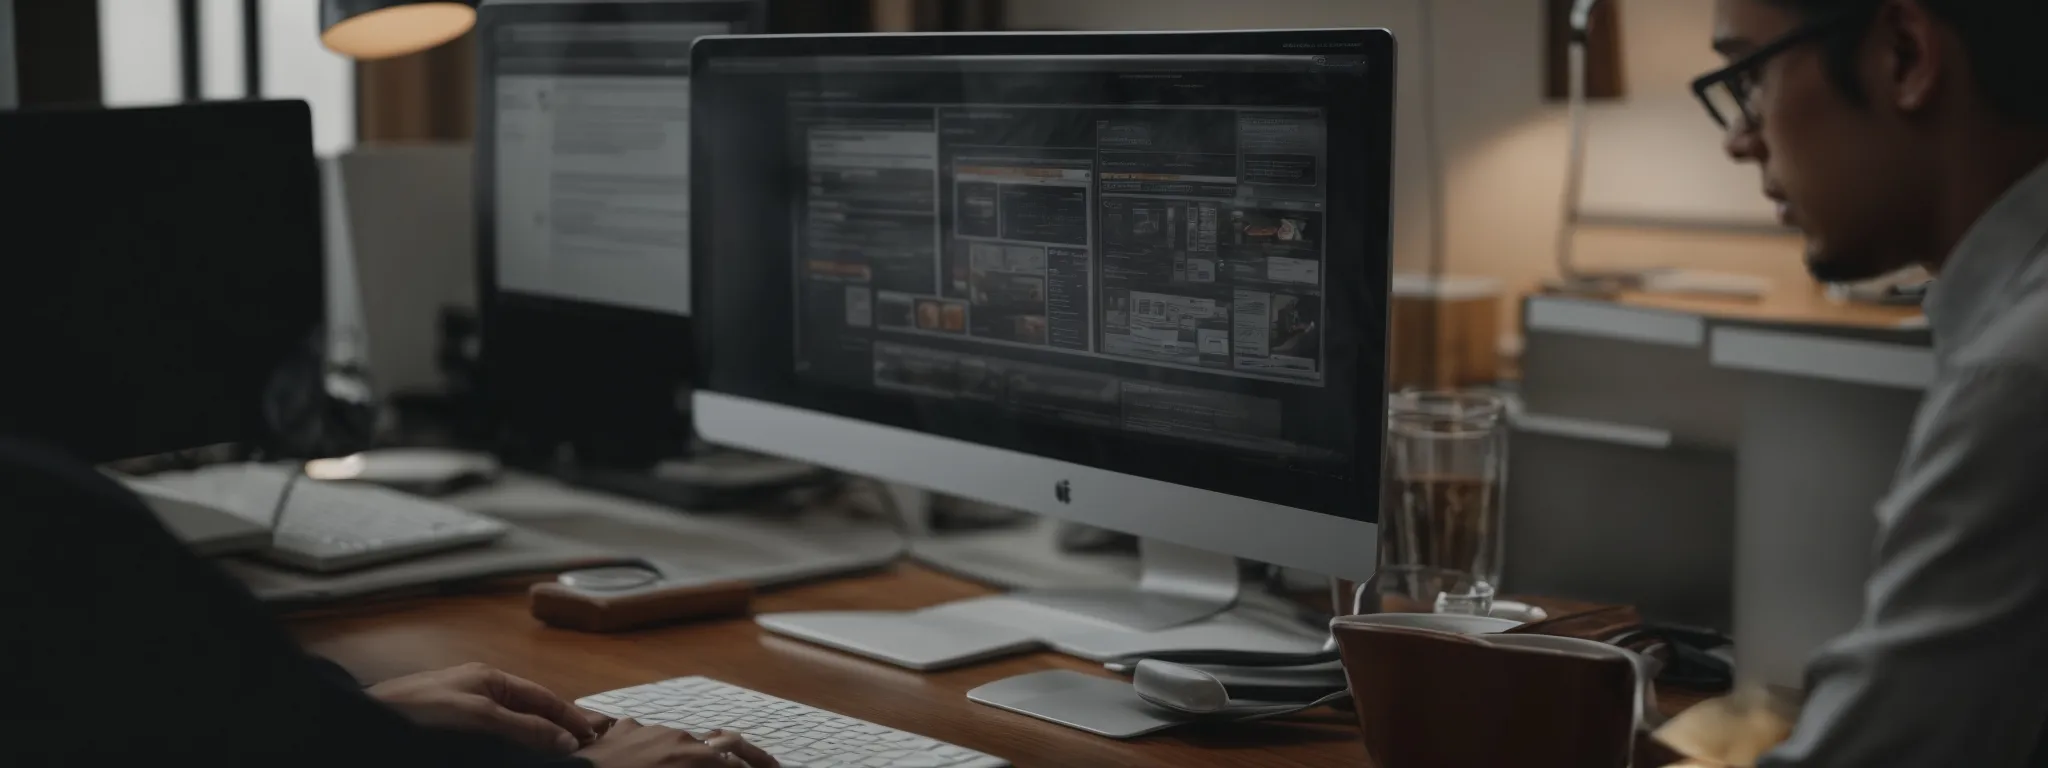 a web designer thoughtfully arranges navigational elements on a website mockup displayed on a computer screen.